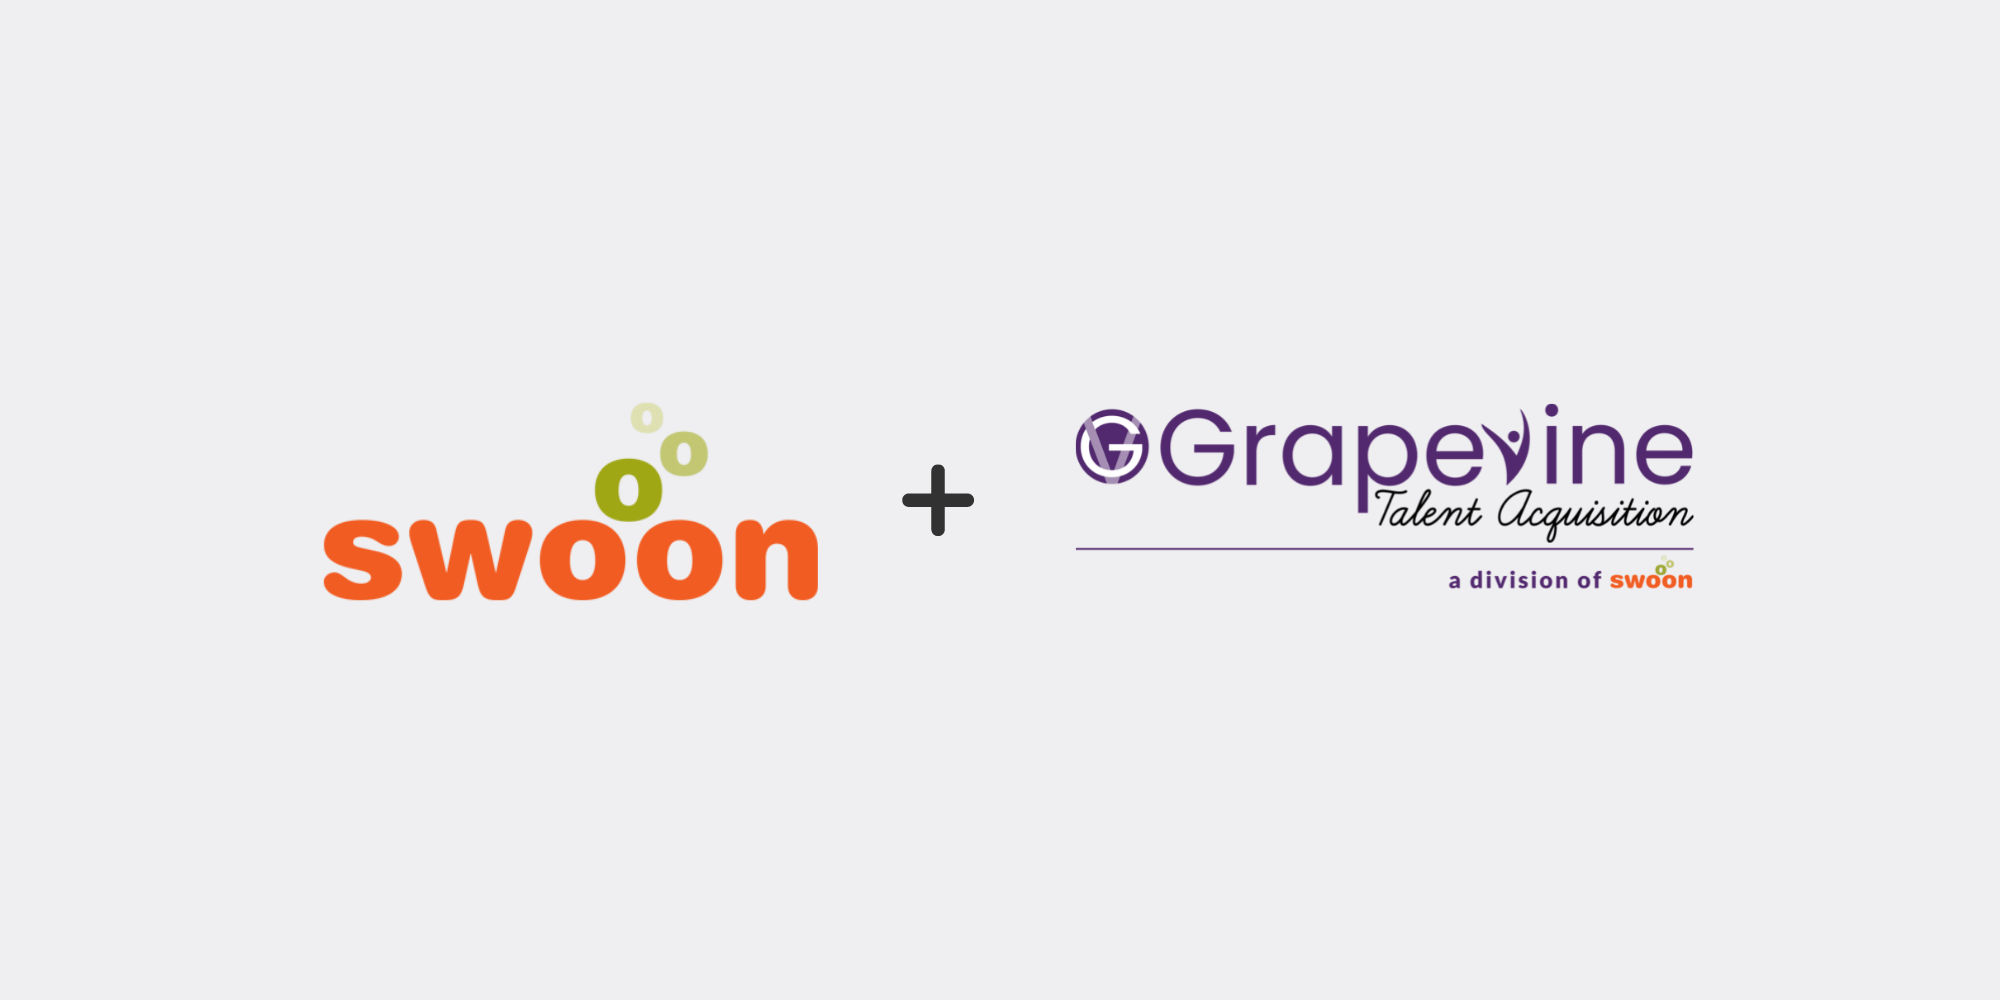 Swoon Acquires Grapevine Talent Acquisition